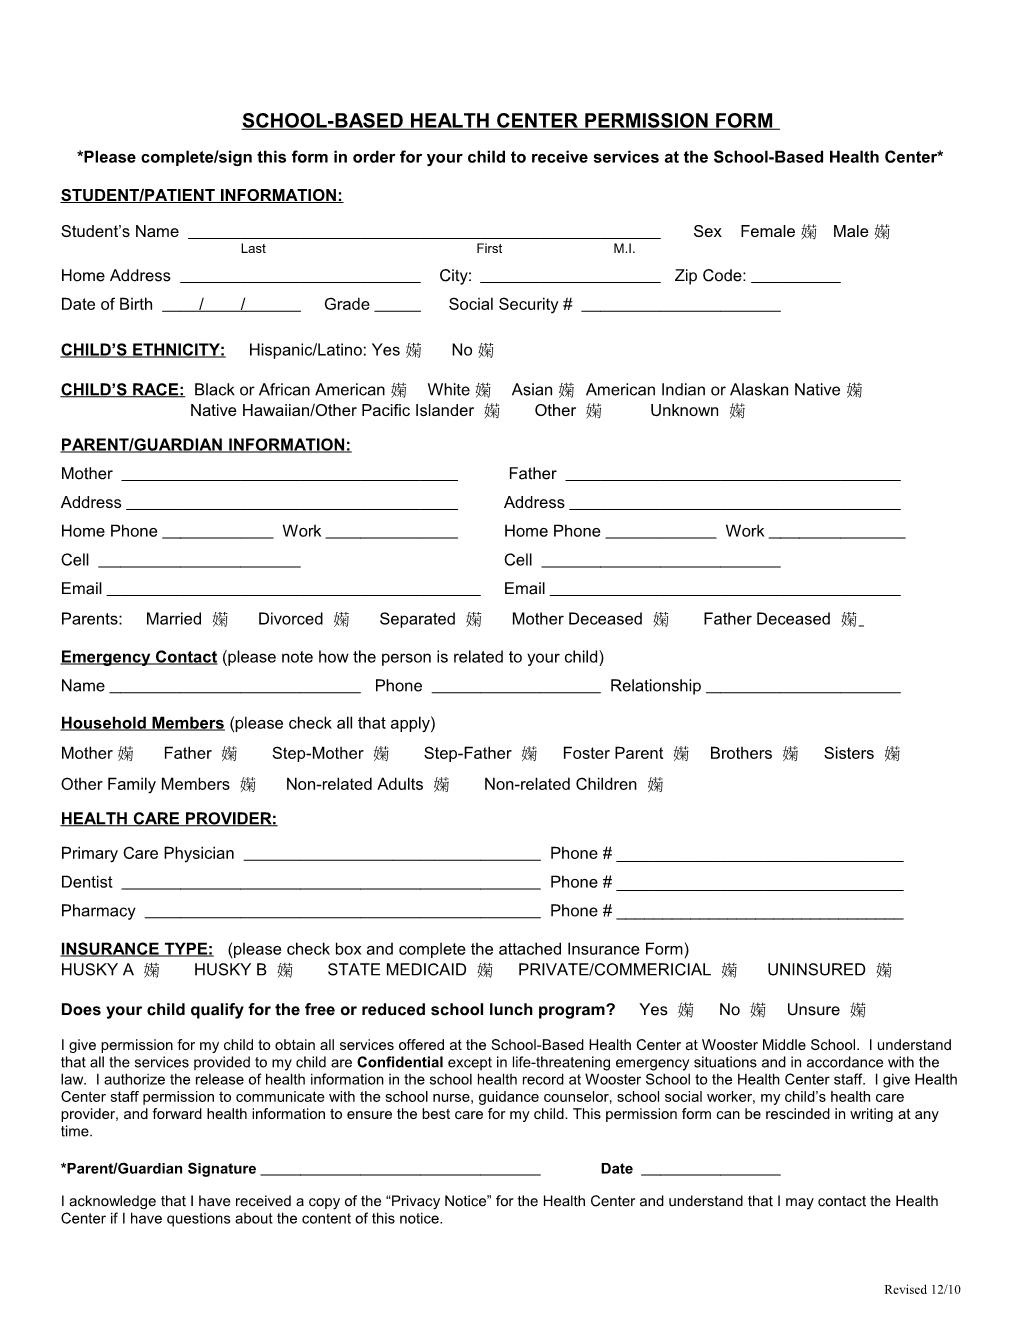 School-Based Health Center Permission Form